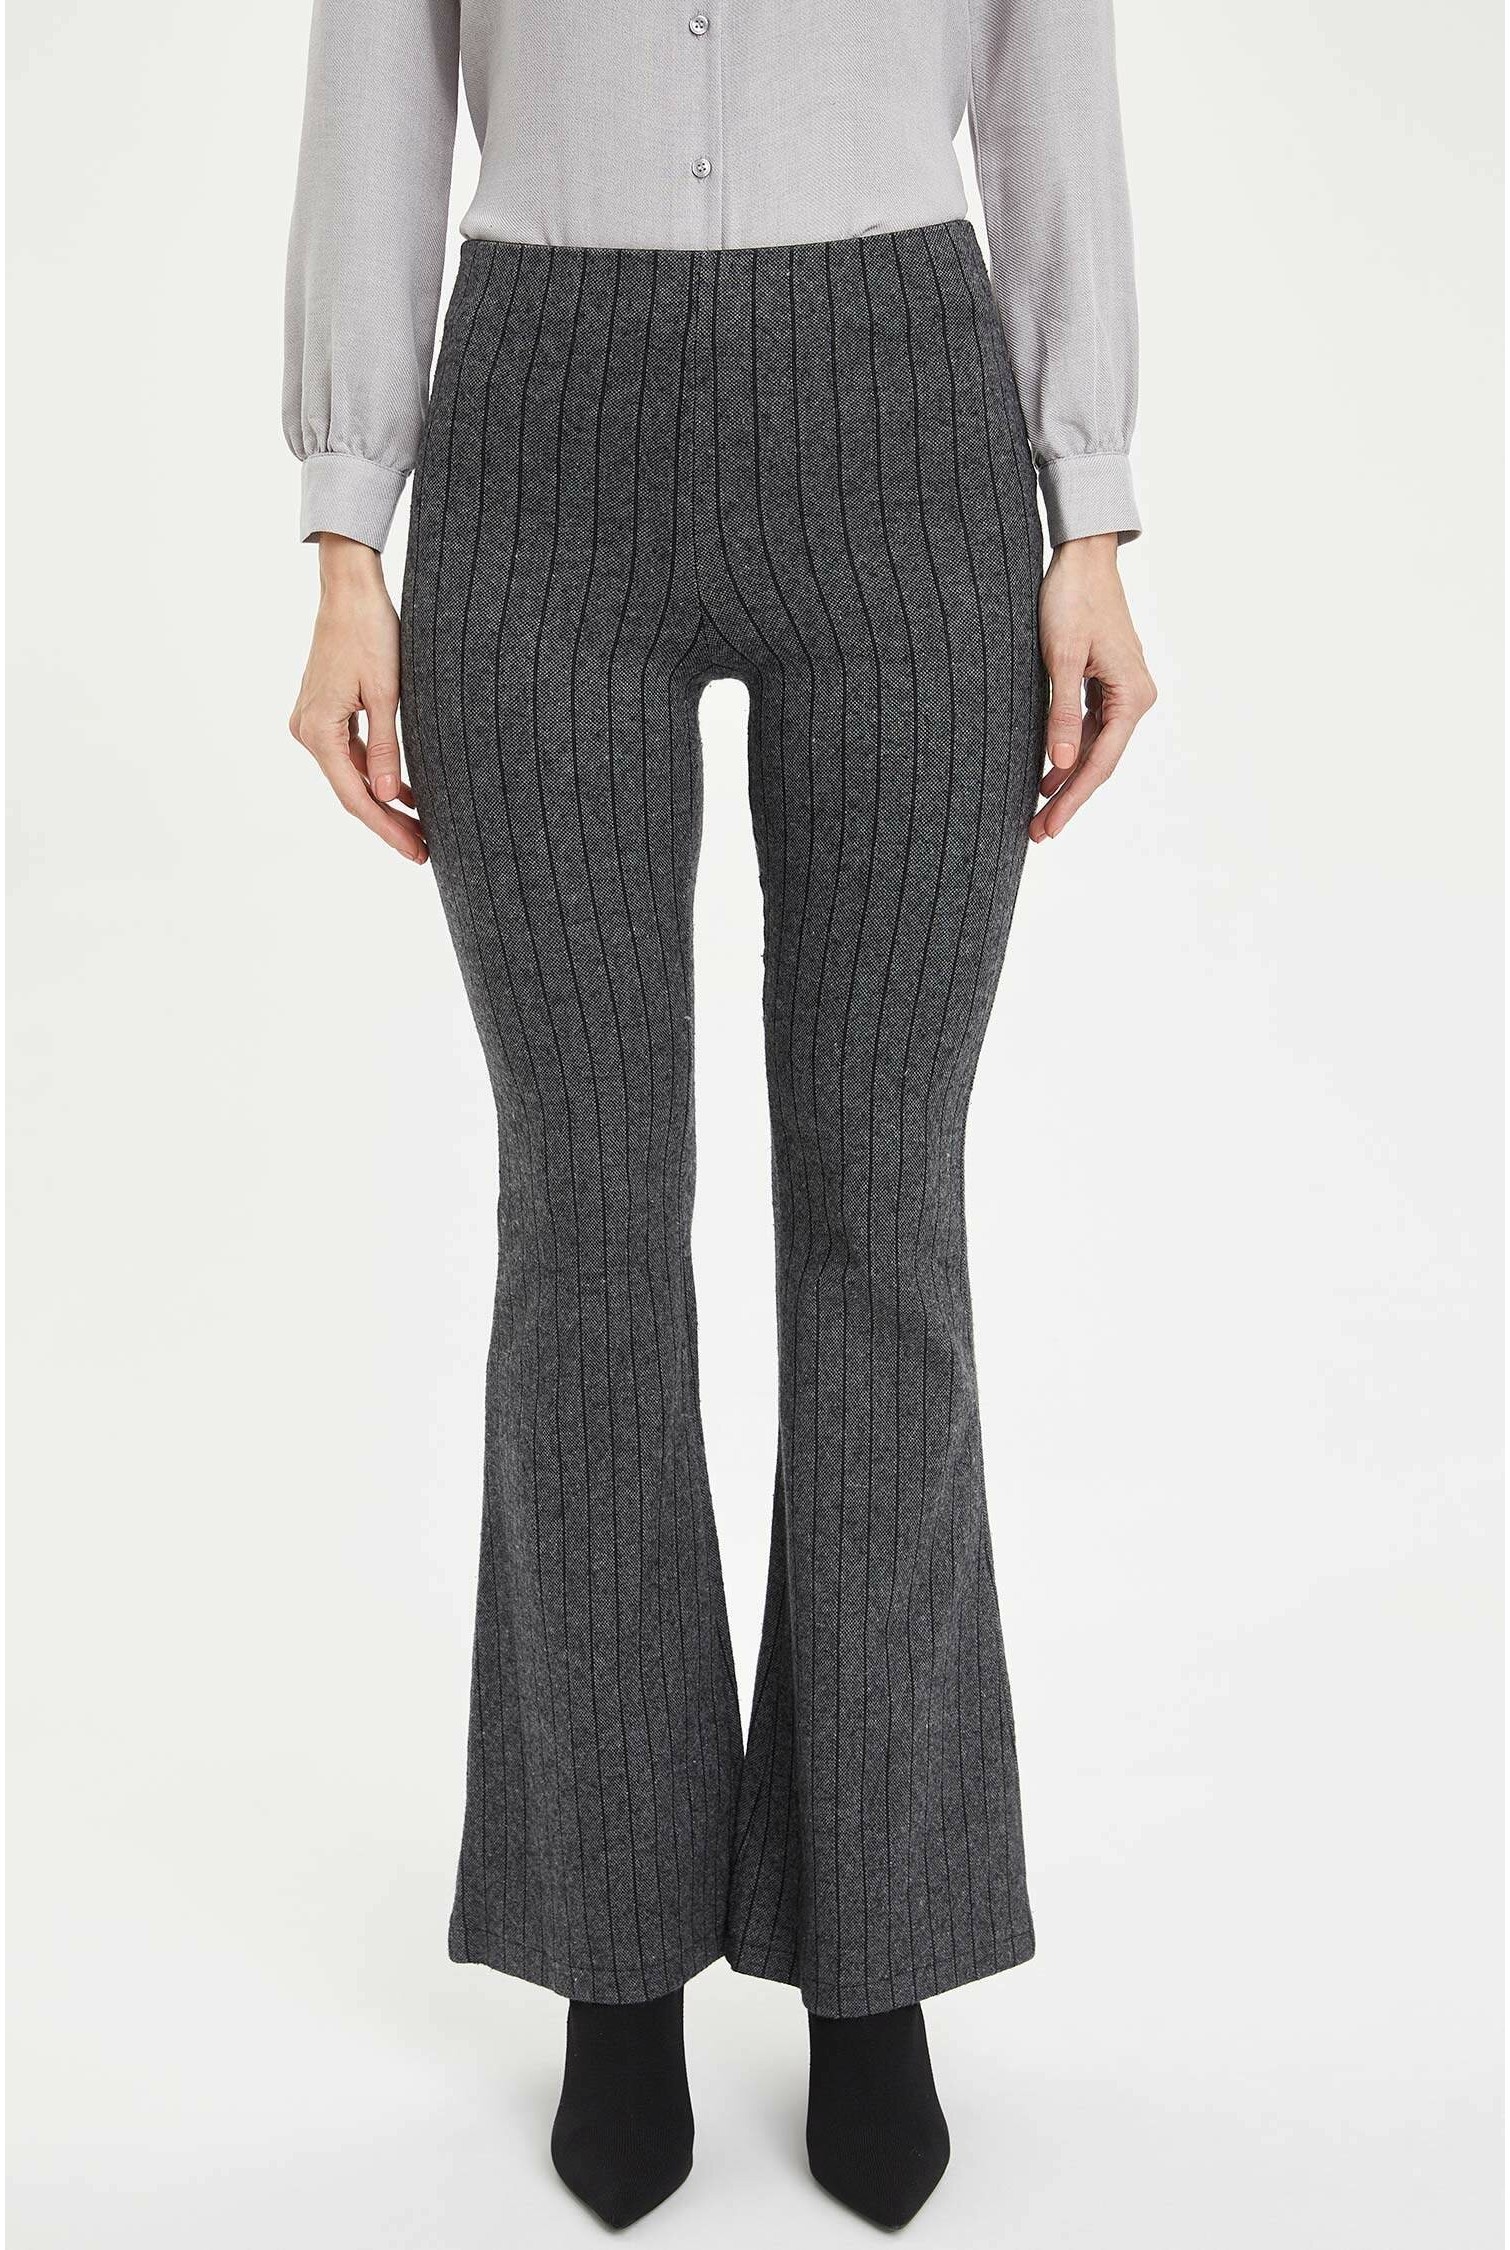 Defacto striped pants for women